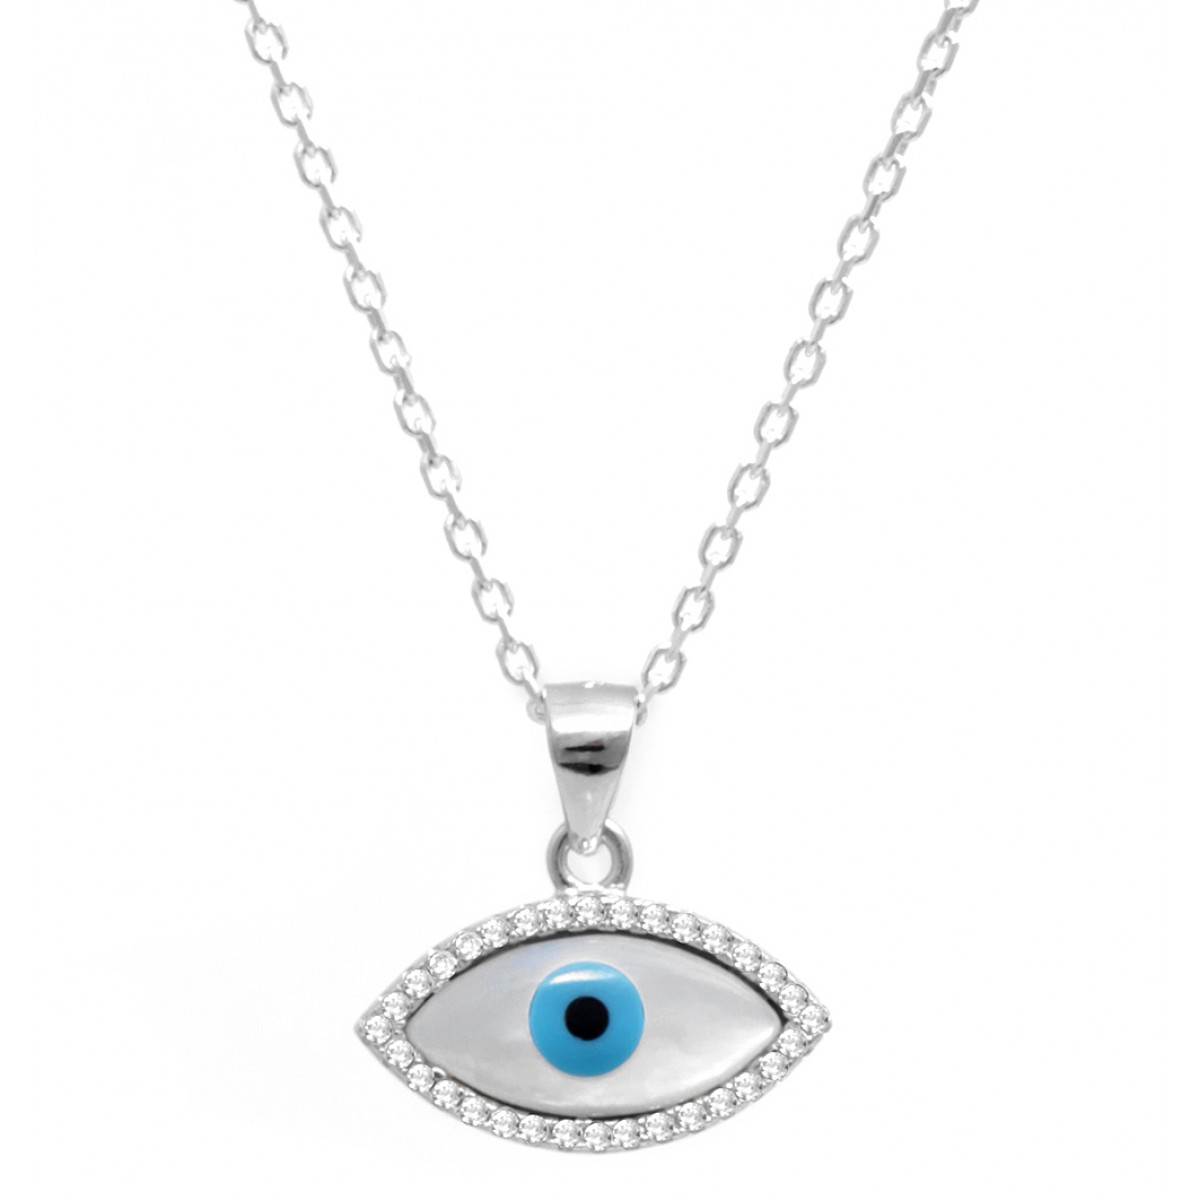 Buy Evil Eye Pendant Necklace in Silver Evil Eye Necklaces